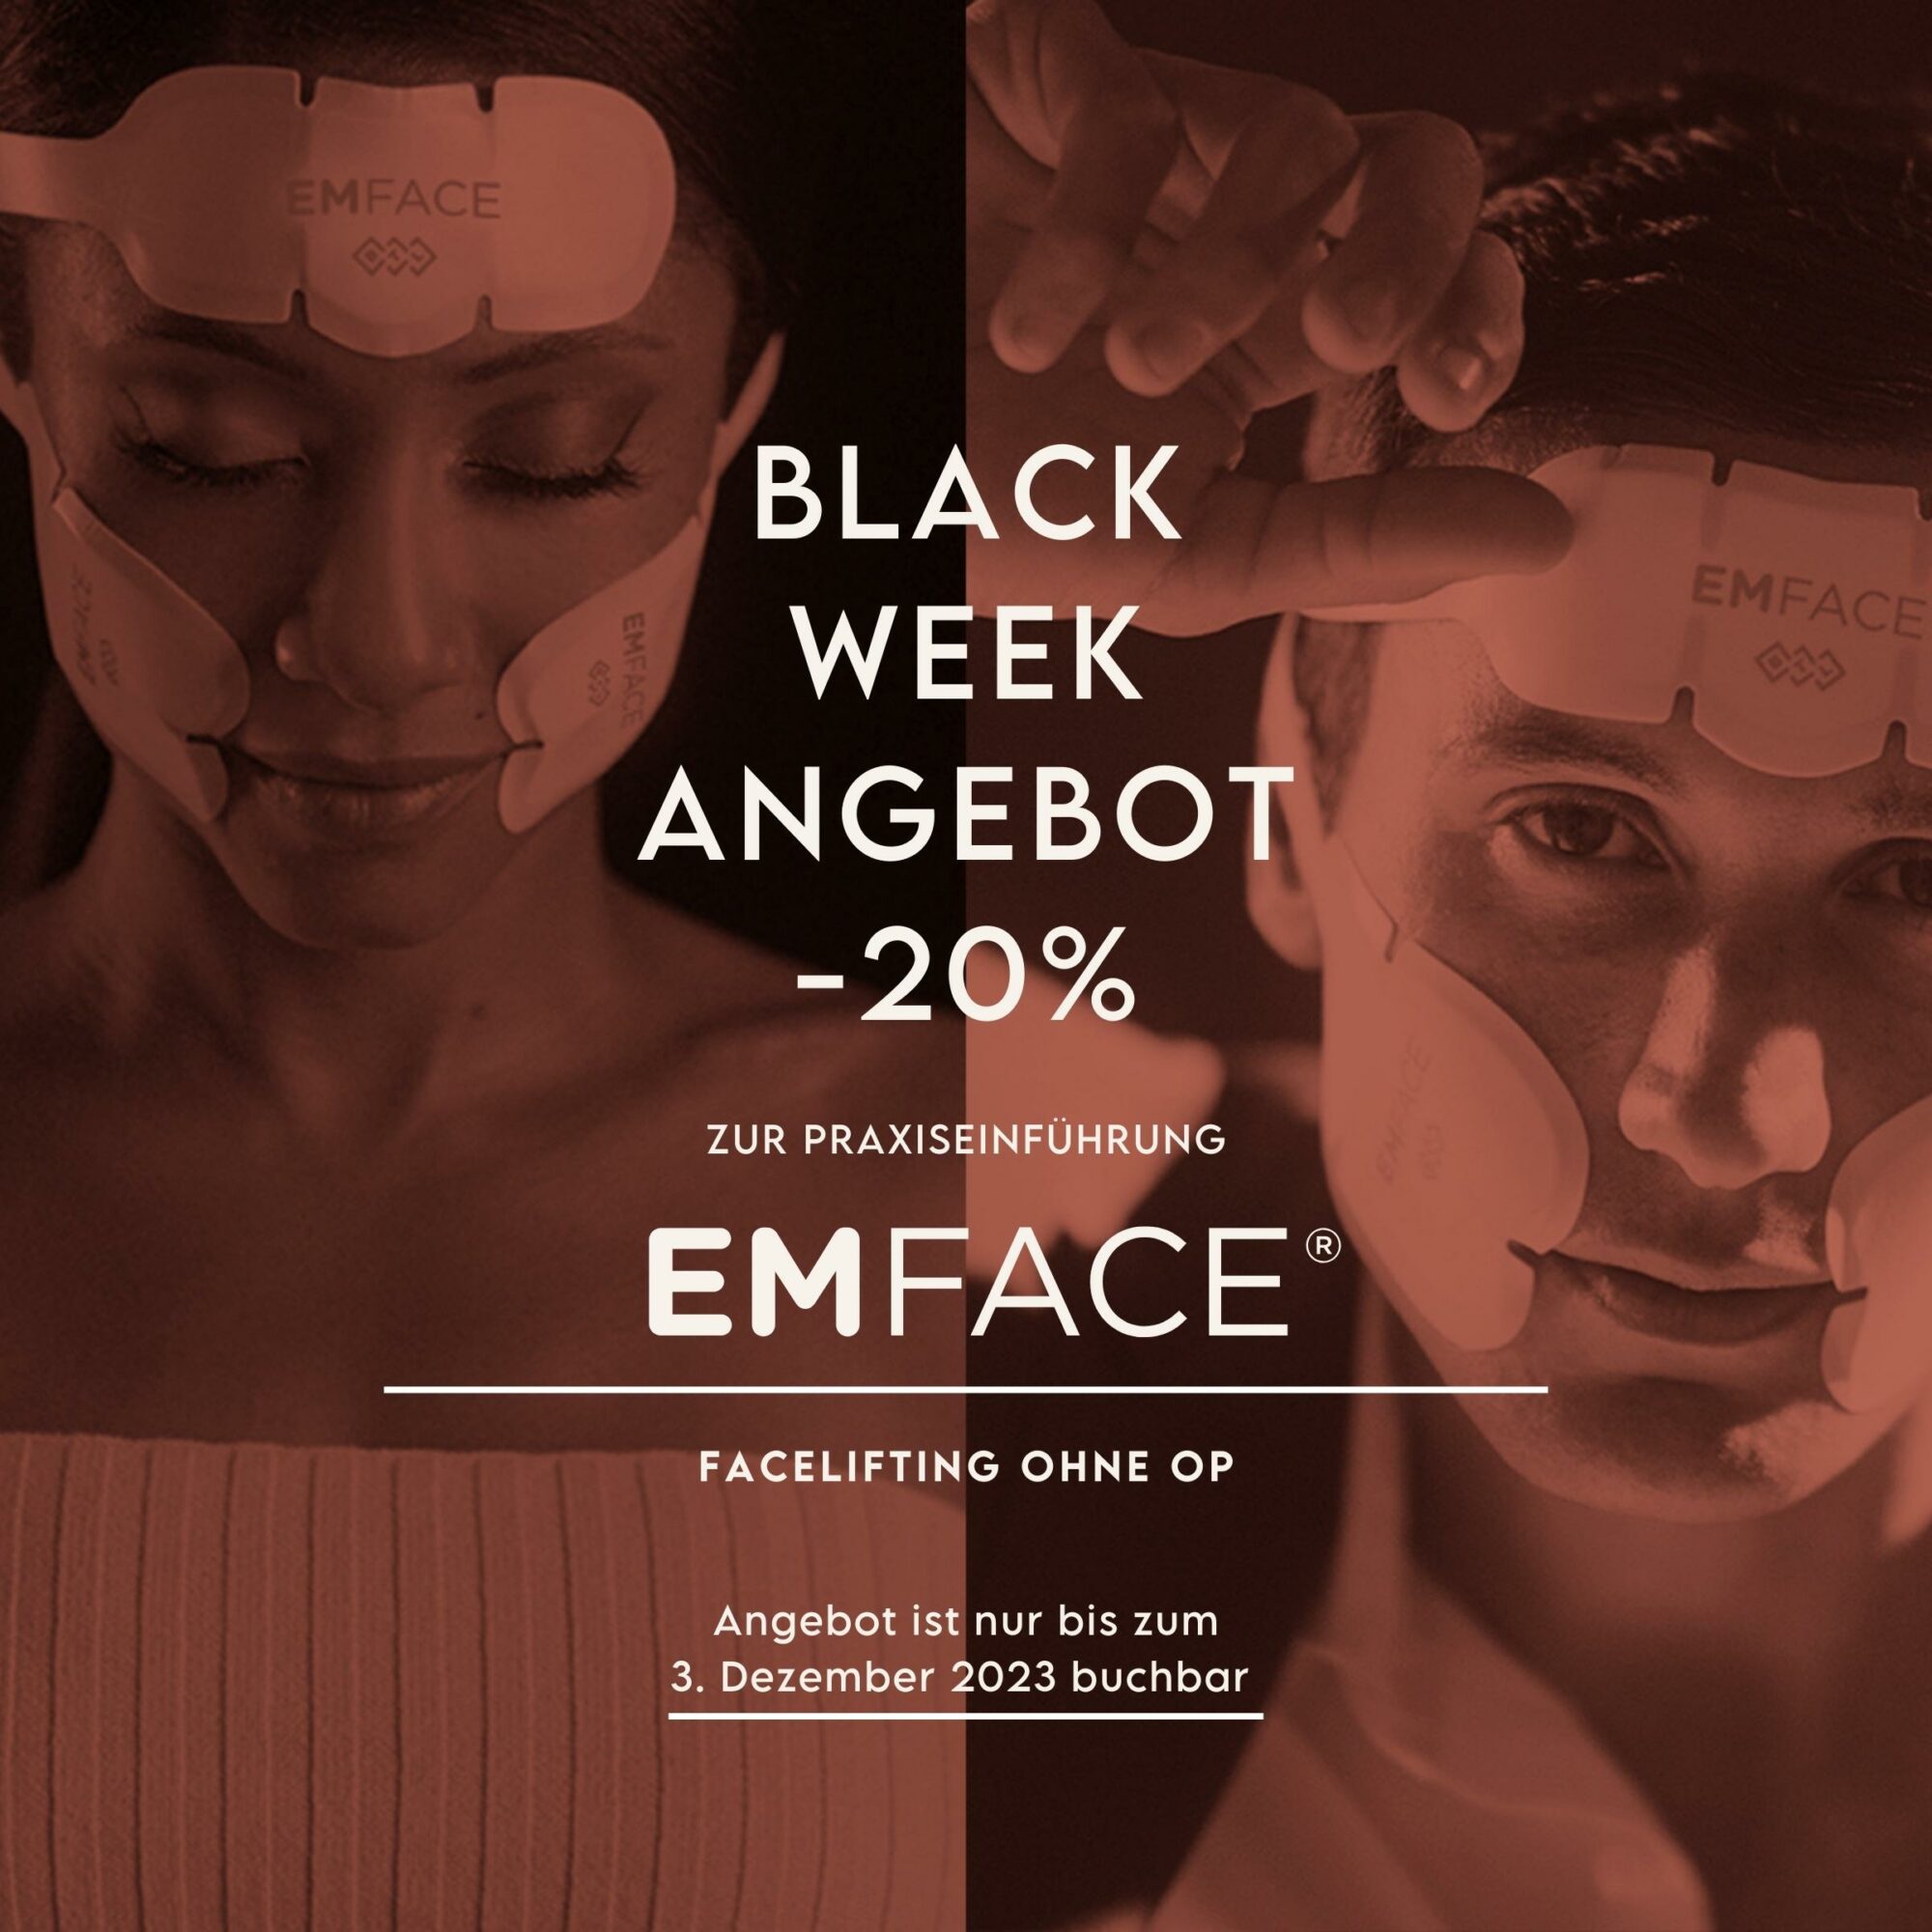 Black Week Emface Leipzig Black Friday Angebot 20% Rabatt Emface-Behandlung Facelifting ohne OP ohne Katzengesicht Leipzig